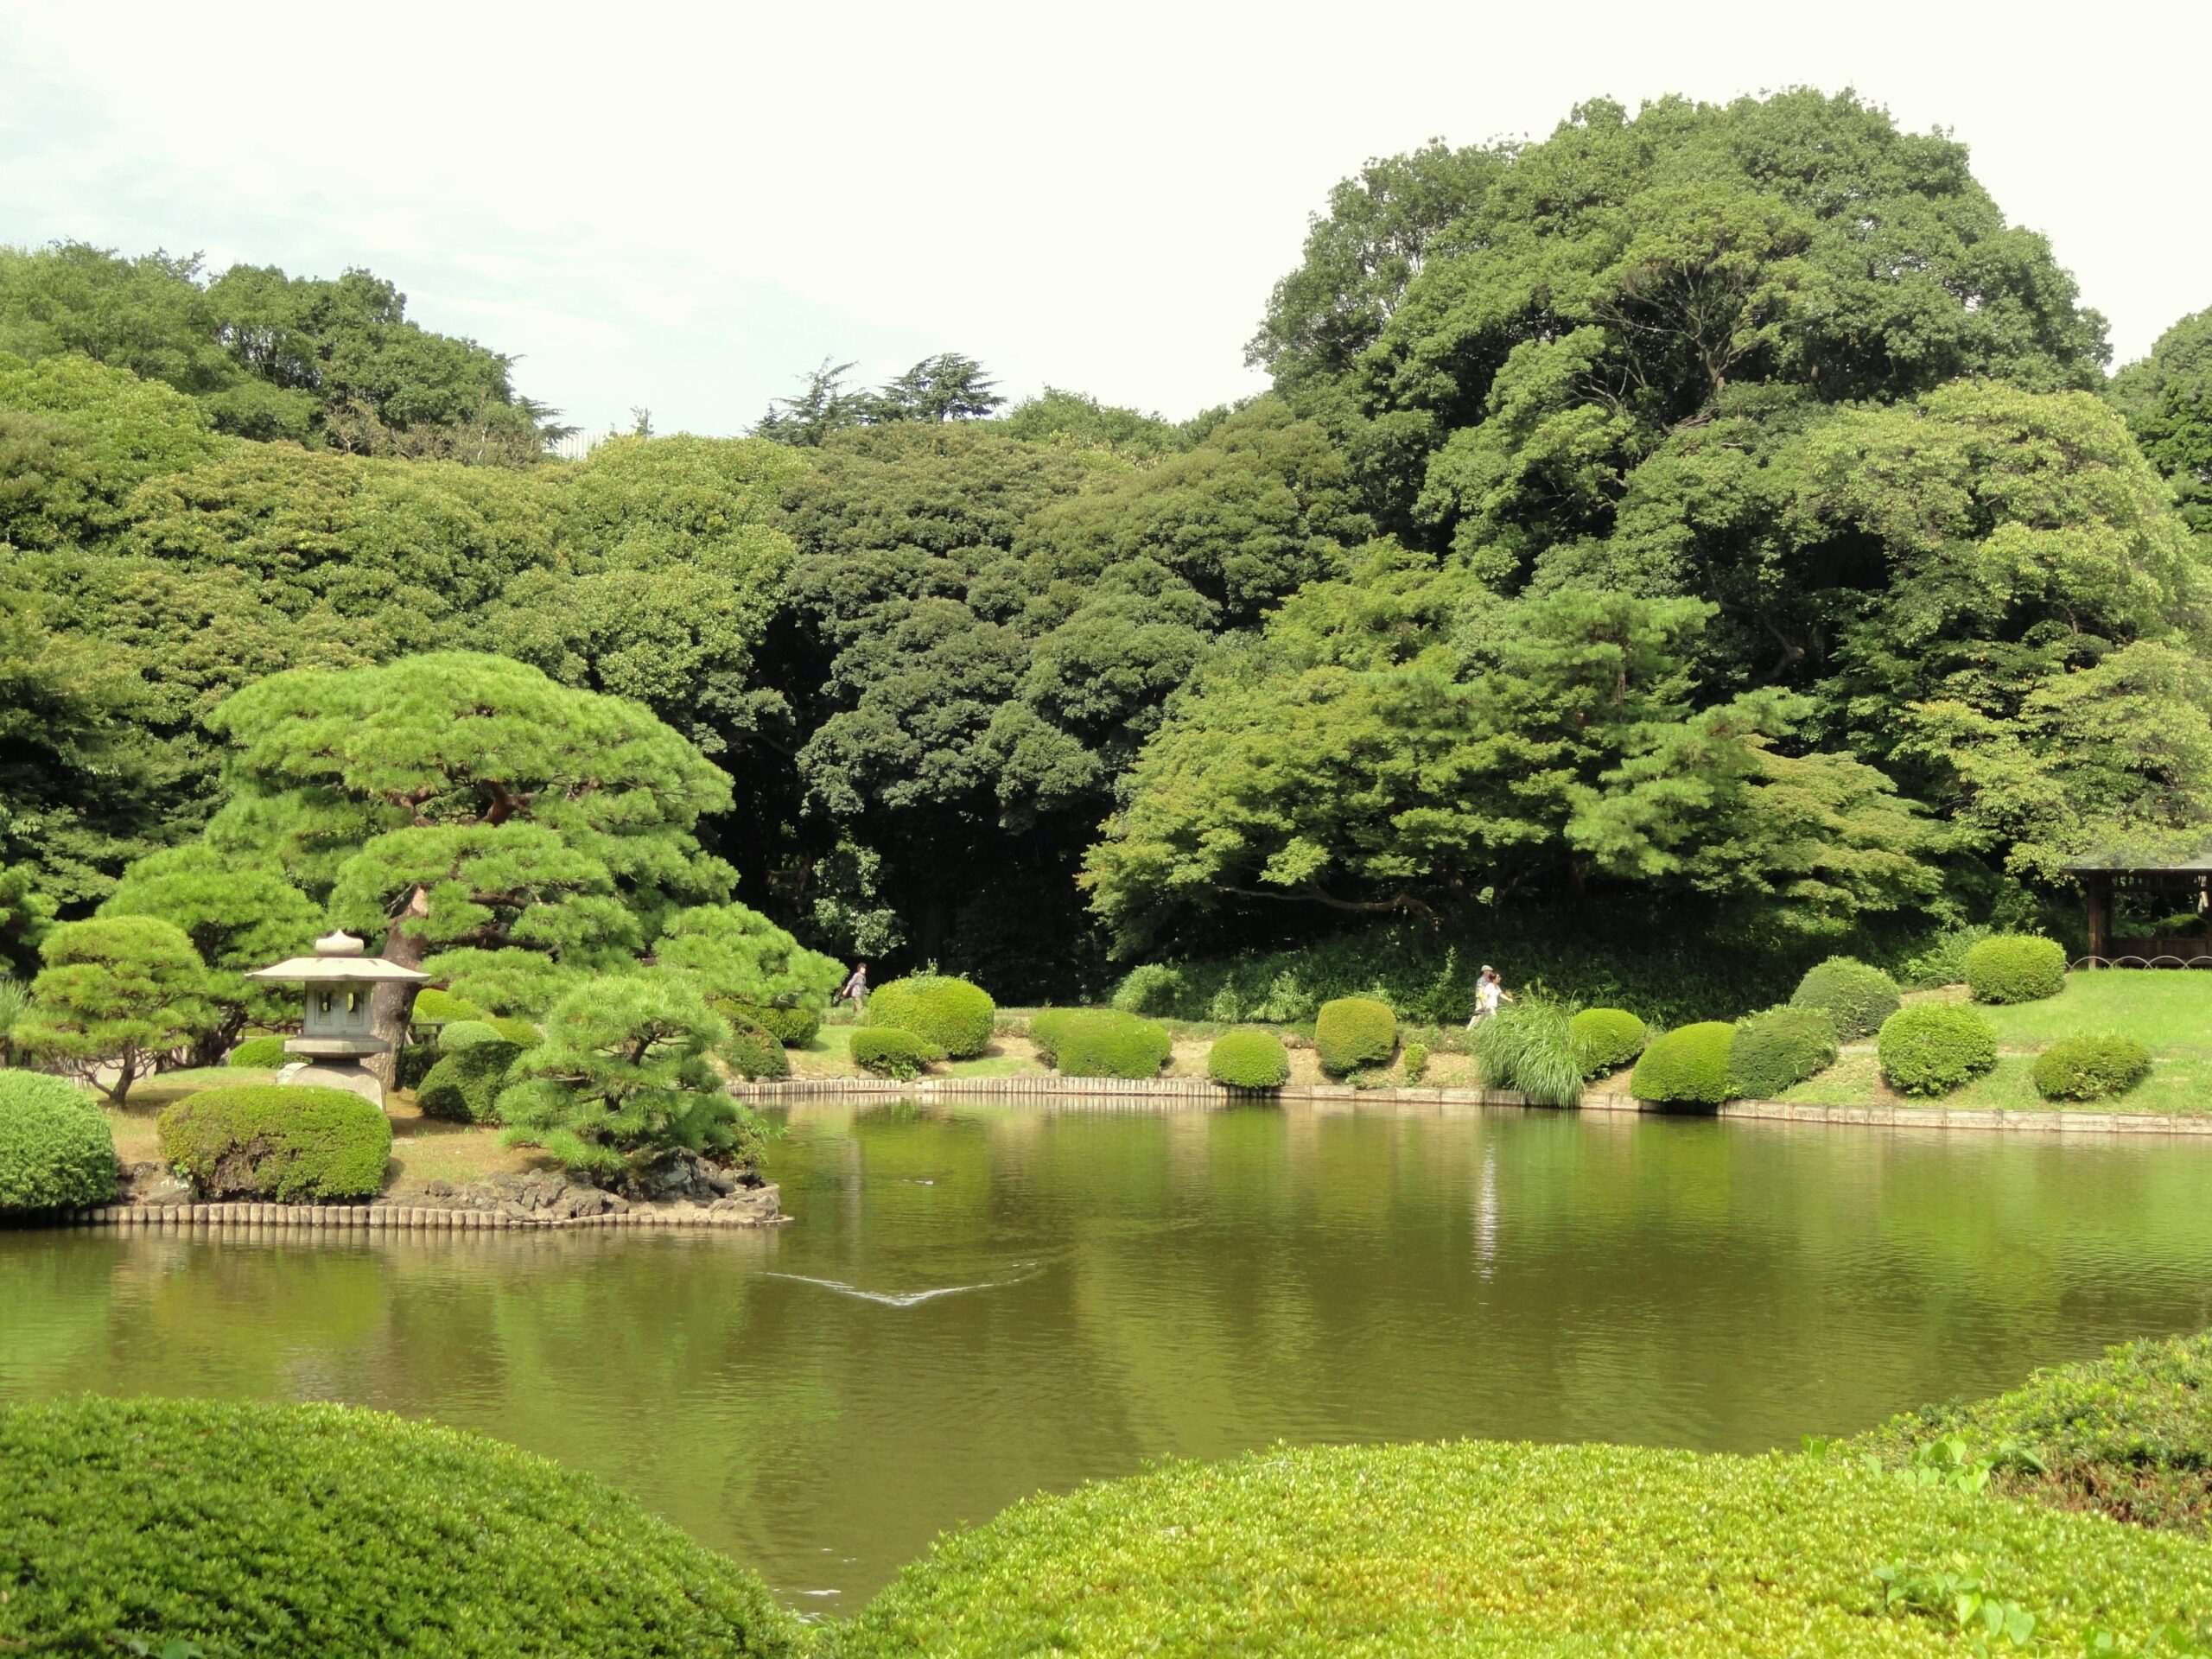 FileShinjuku Gyoen National Garden